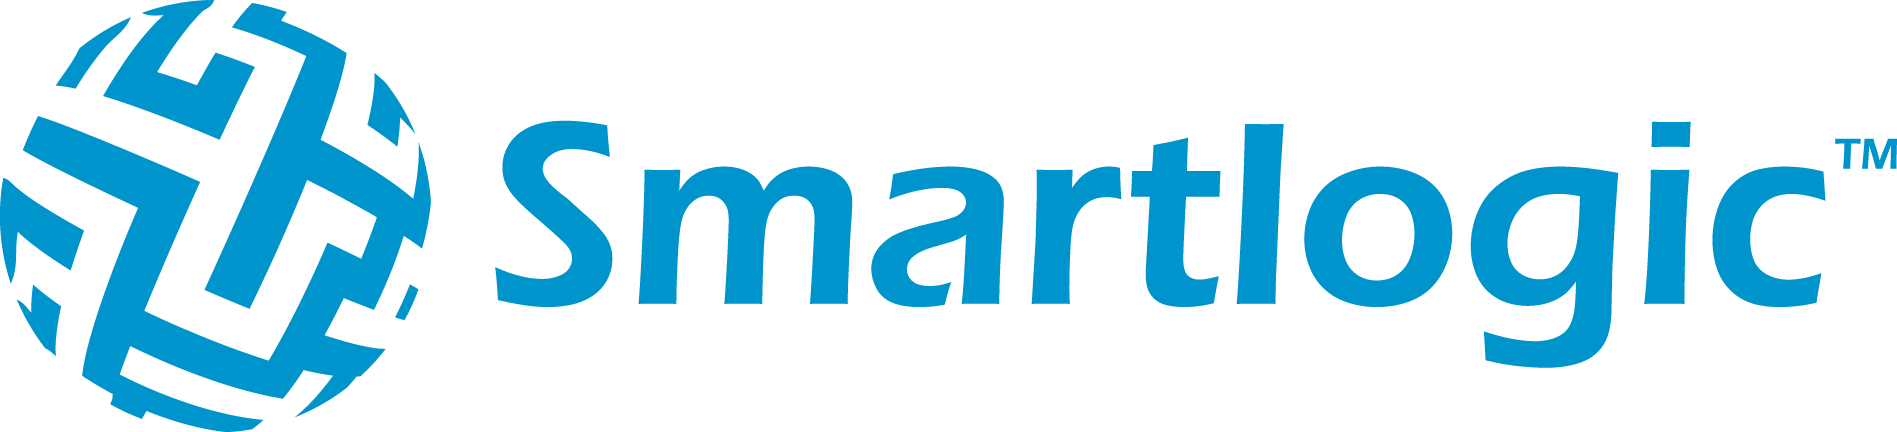 logo_smartlogic